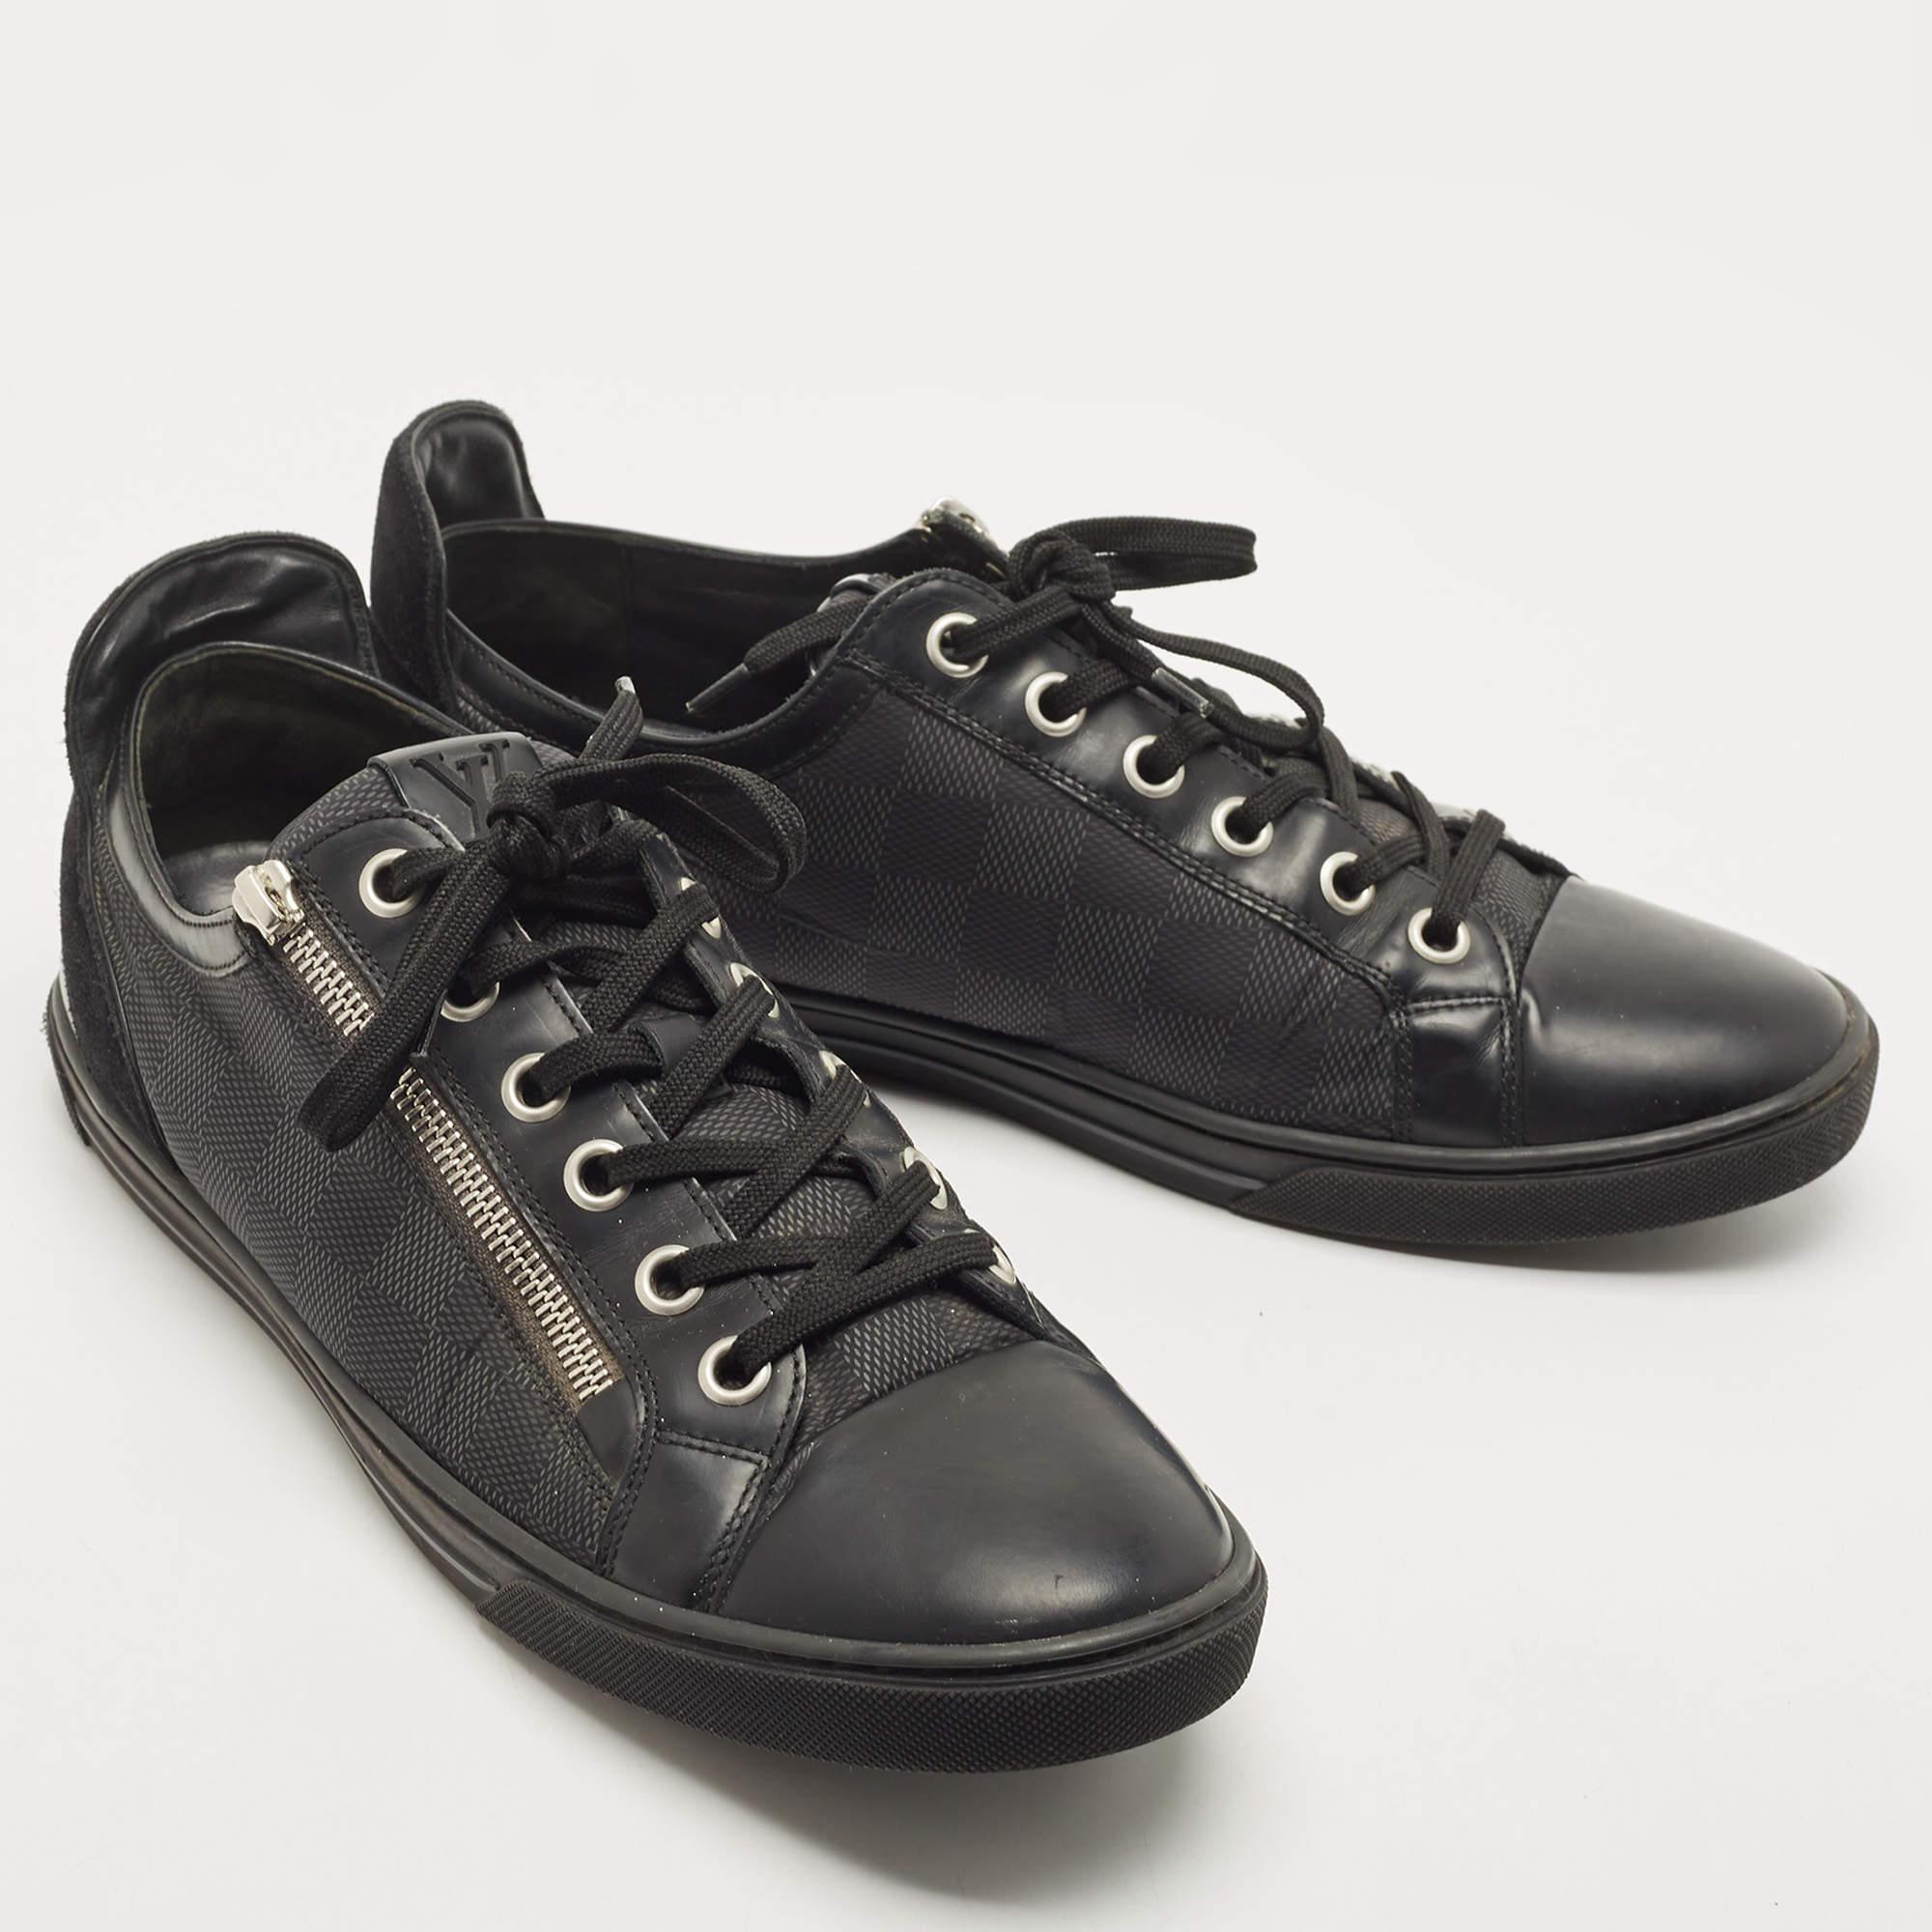 Louis Vuitton Black Leather and Damier Ebene Canvas Low Top Sneakers Size 42.5 In Good Condition For Sale In Dubai, Al Qouz 2